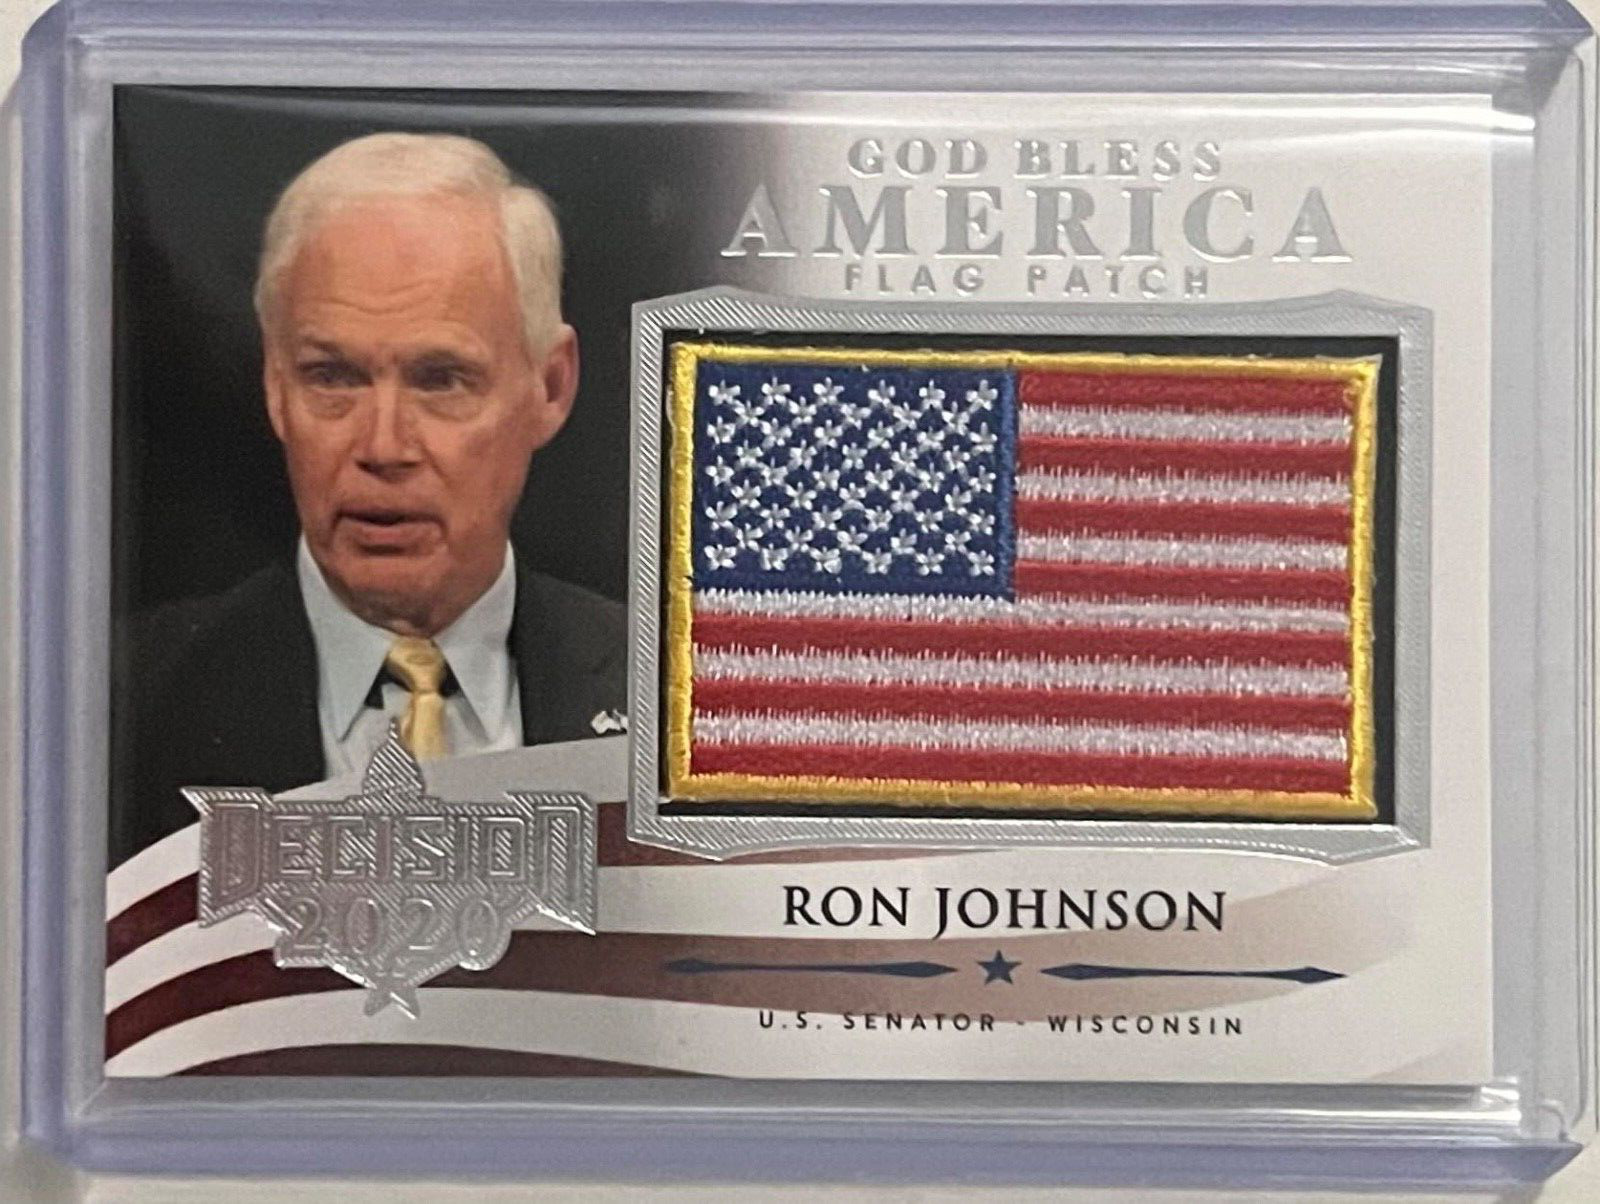 RON JOHNSON 2020 DECISION GOD BLESS FLAG PATCH CARD U.S. SENATOR WISCONSIN